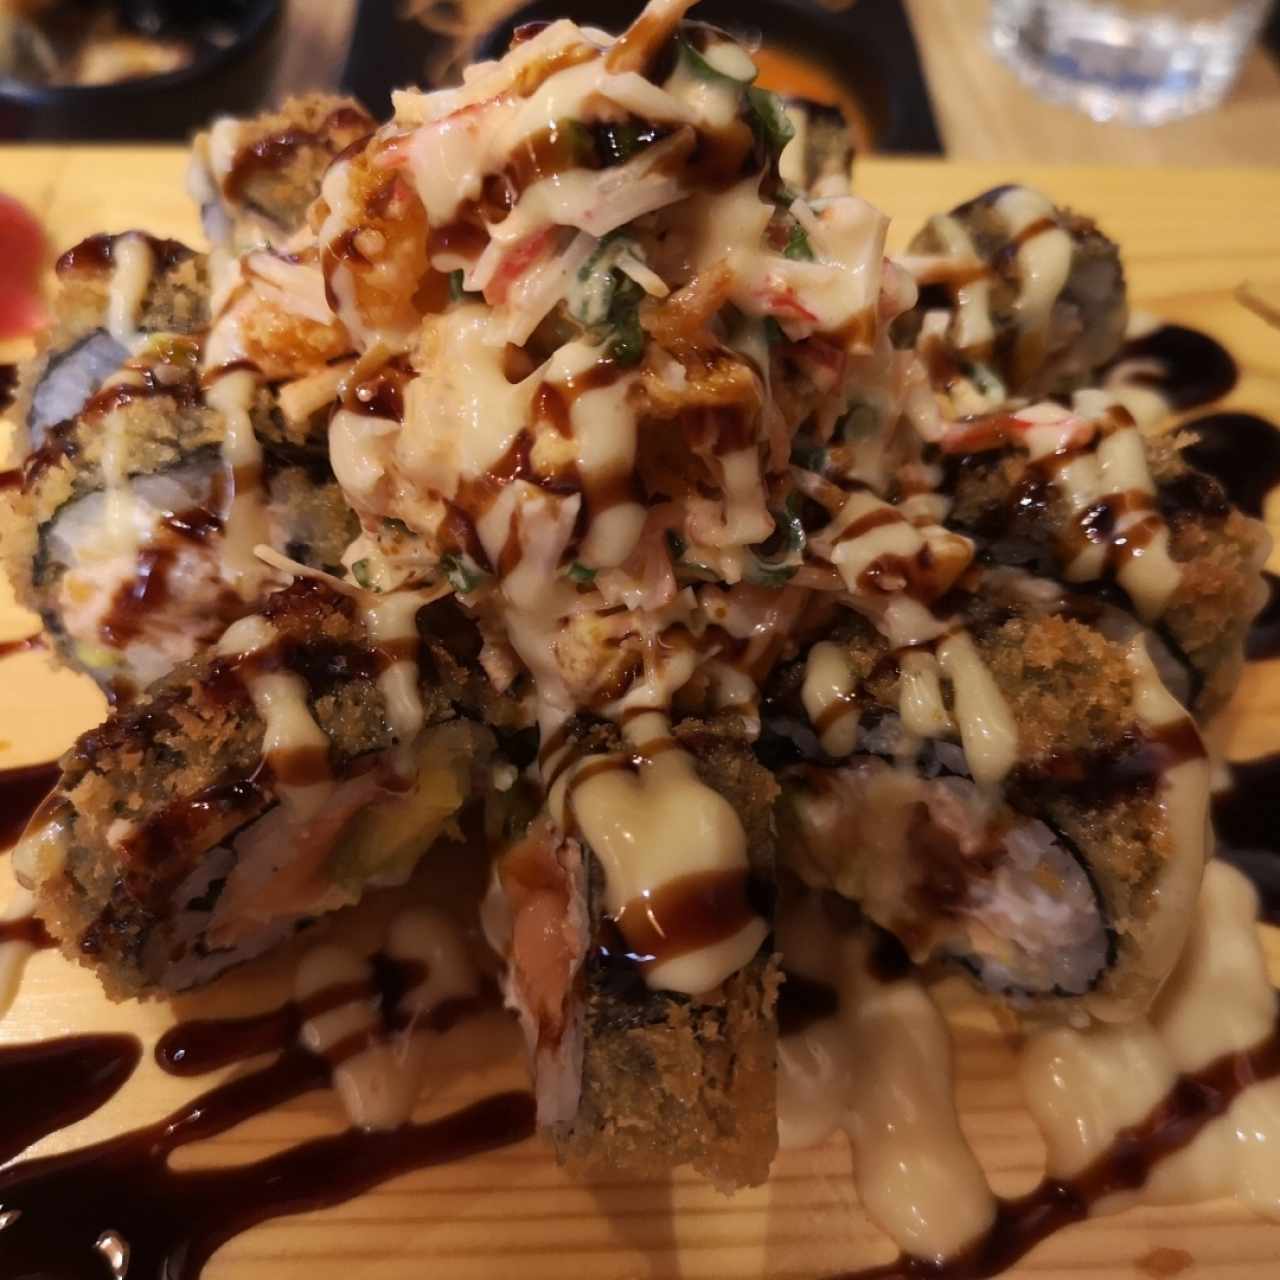 Sushi rolls - Tiger roll